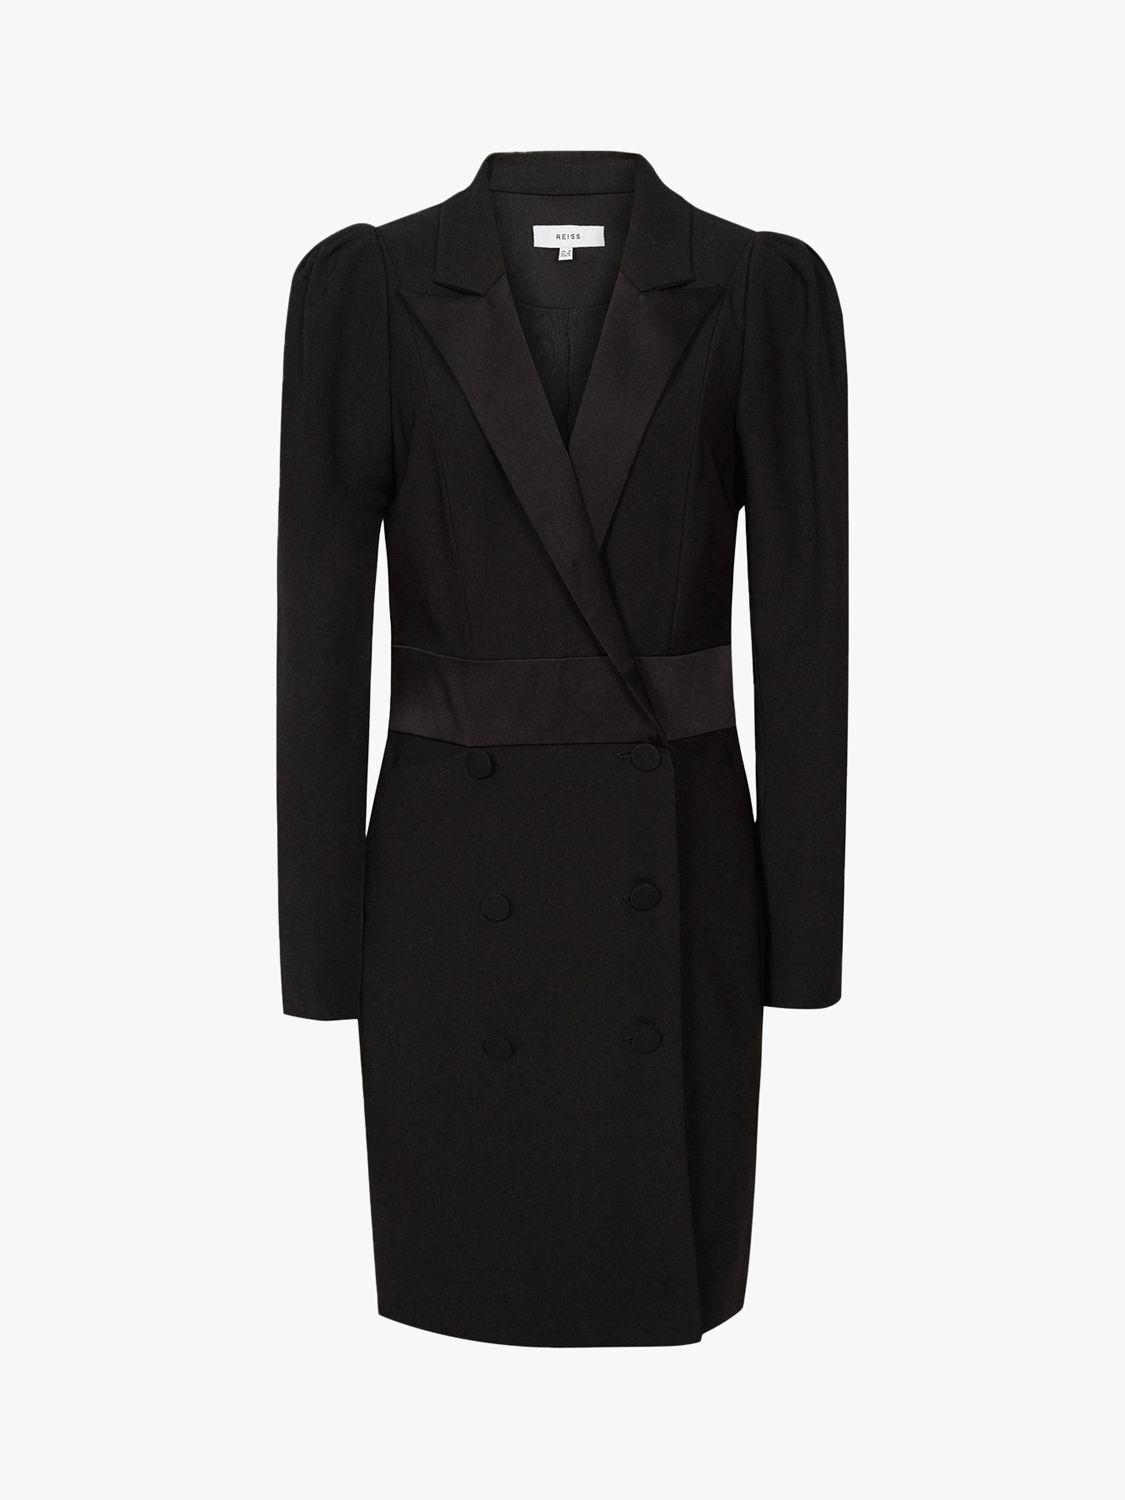 Reiss Avani Puff Sleeve Tuxedo Dress, Black at John Lewis & Partners